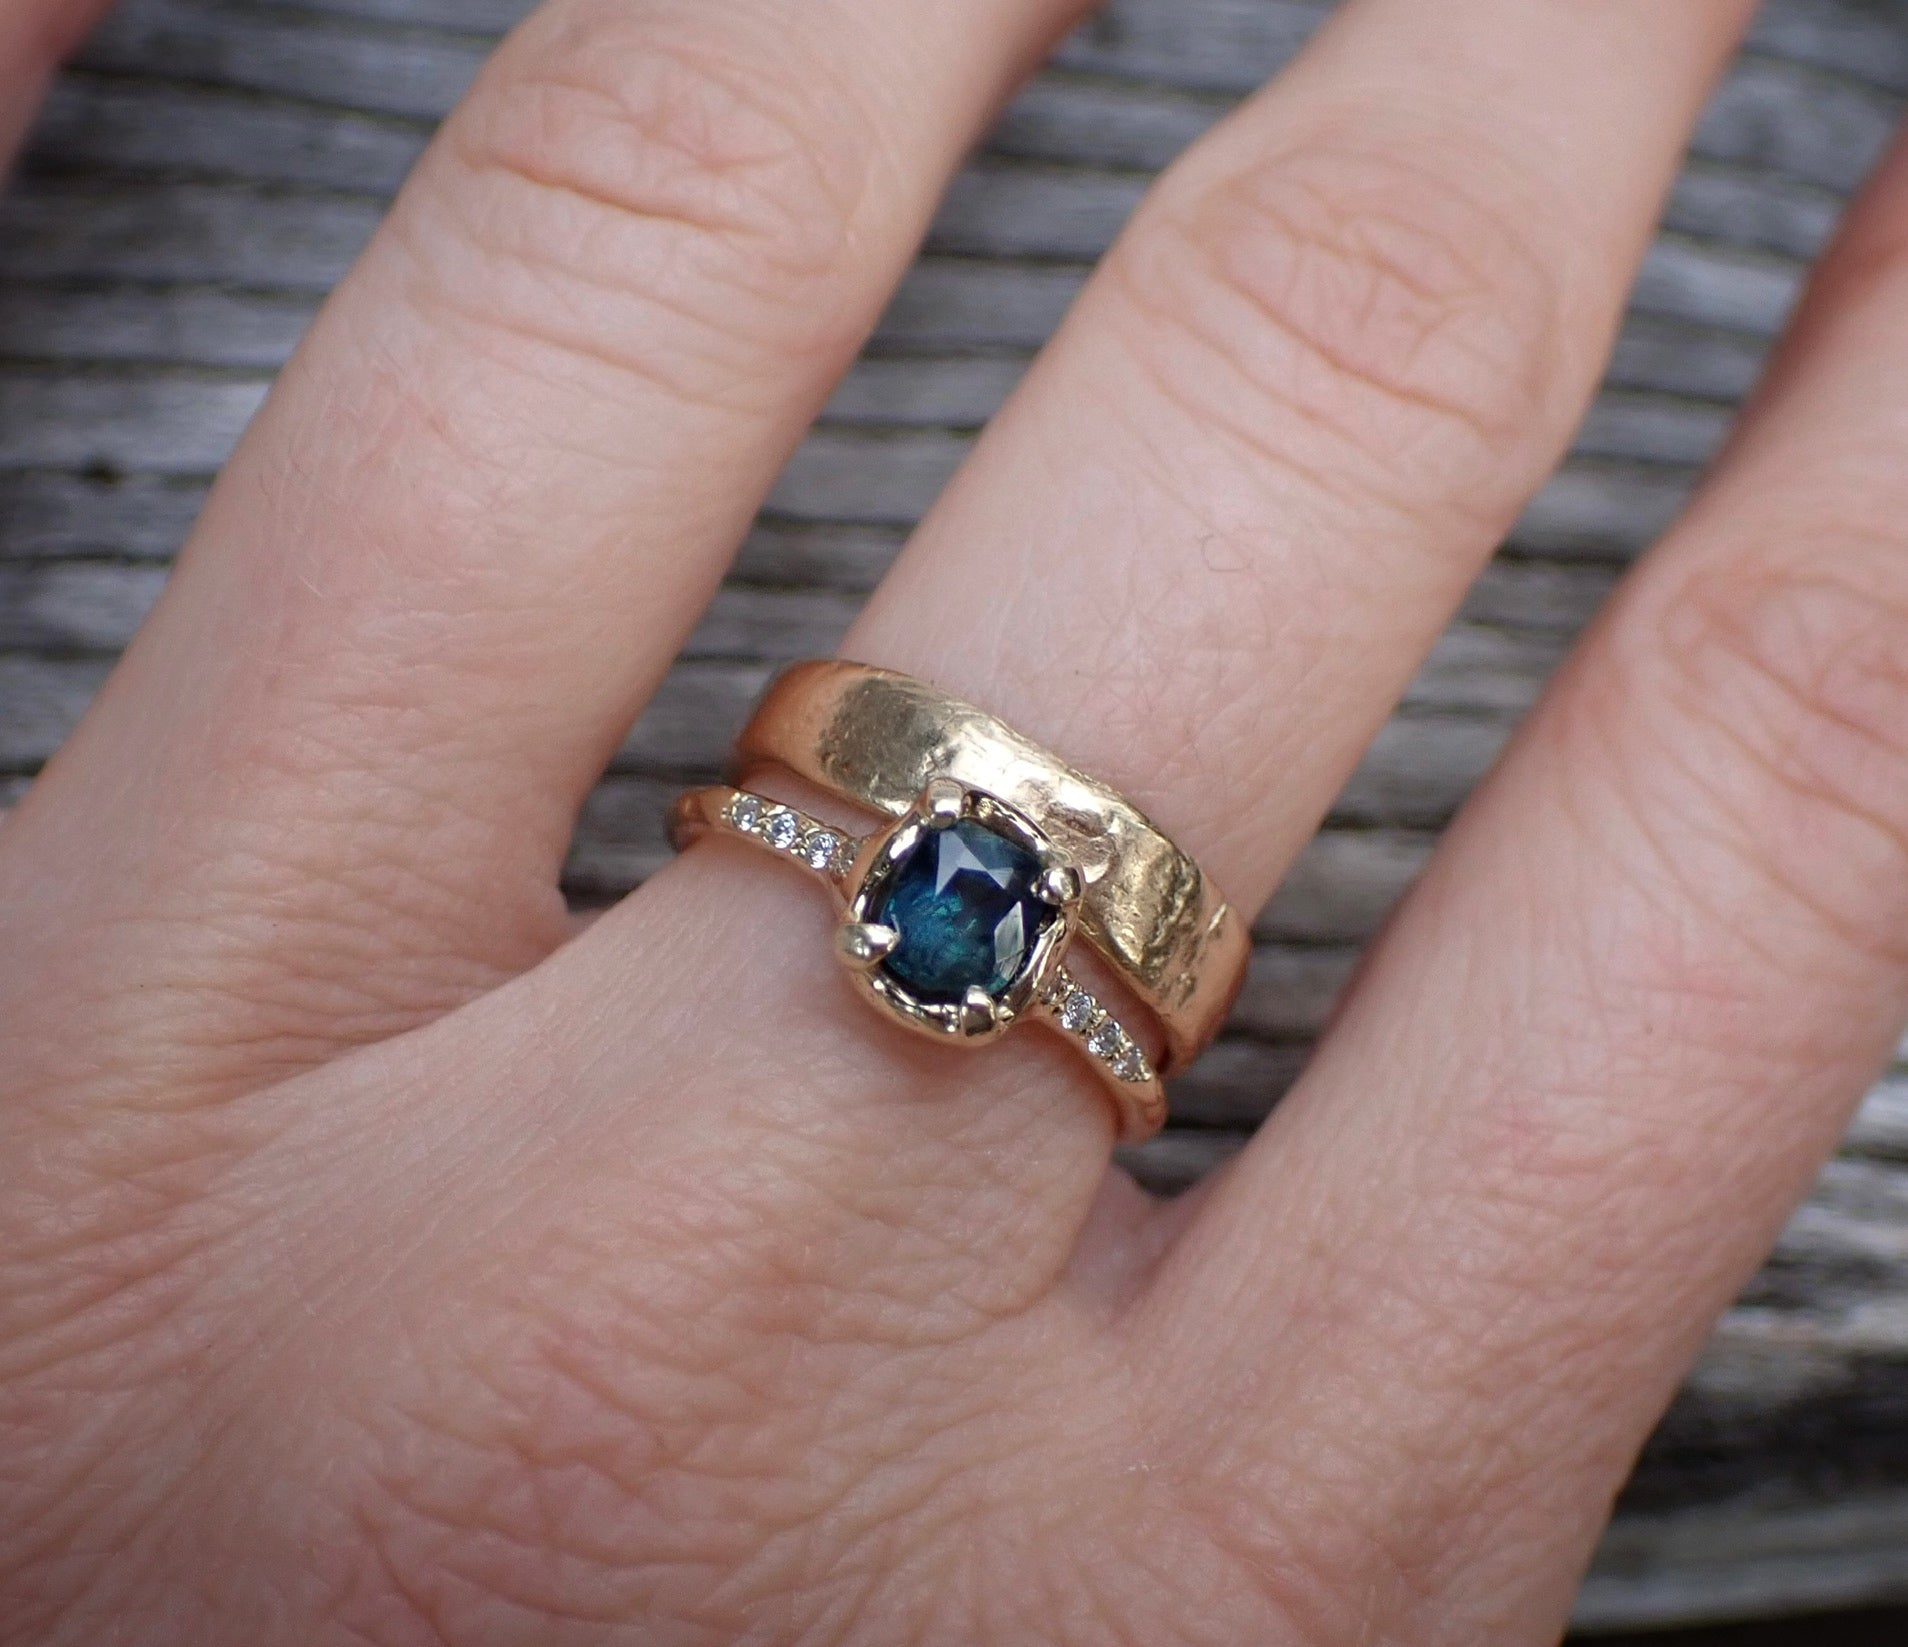 7 Ways To Make Your Own Gemstone Ring